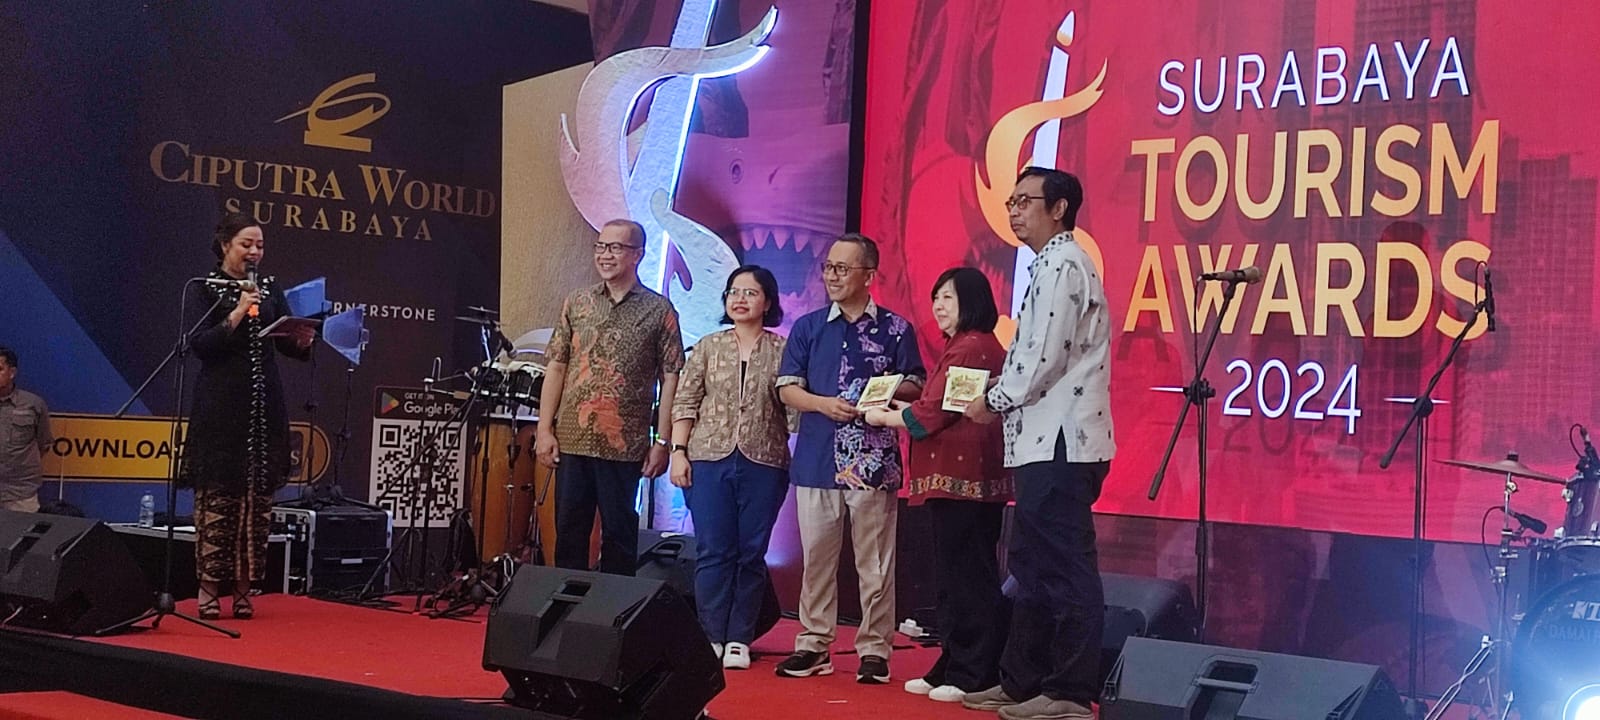 Puncak Surabaya Tourism Awards 2024, Berikan 11 Kategori Penghargaan ke Hotel dan Objek Wisata